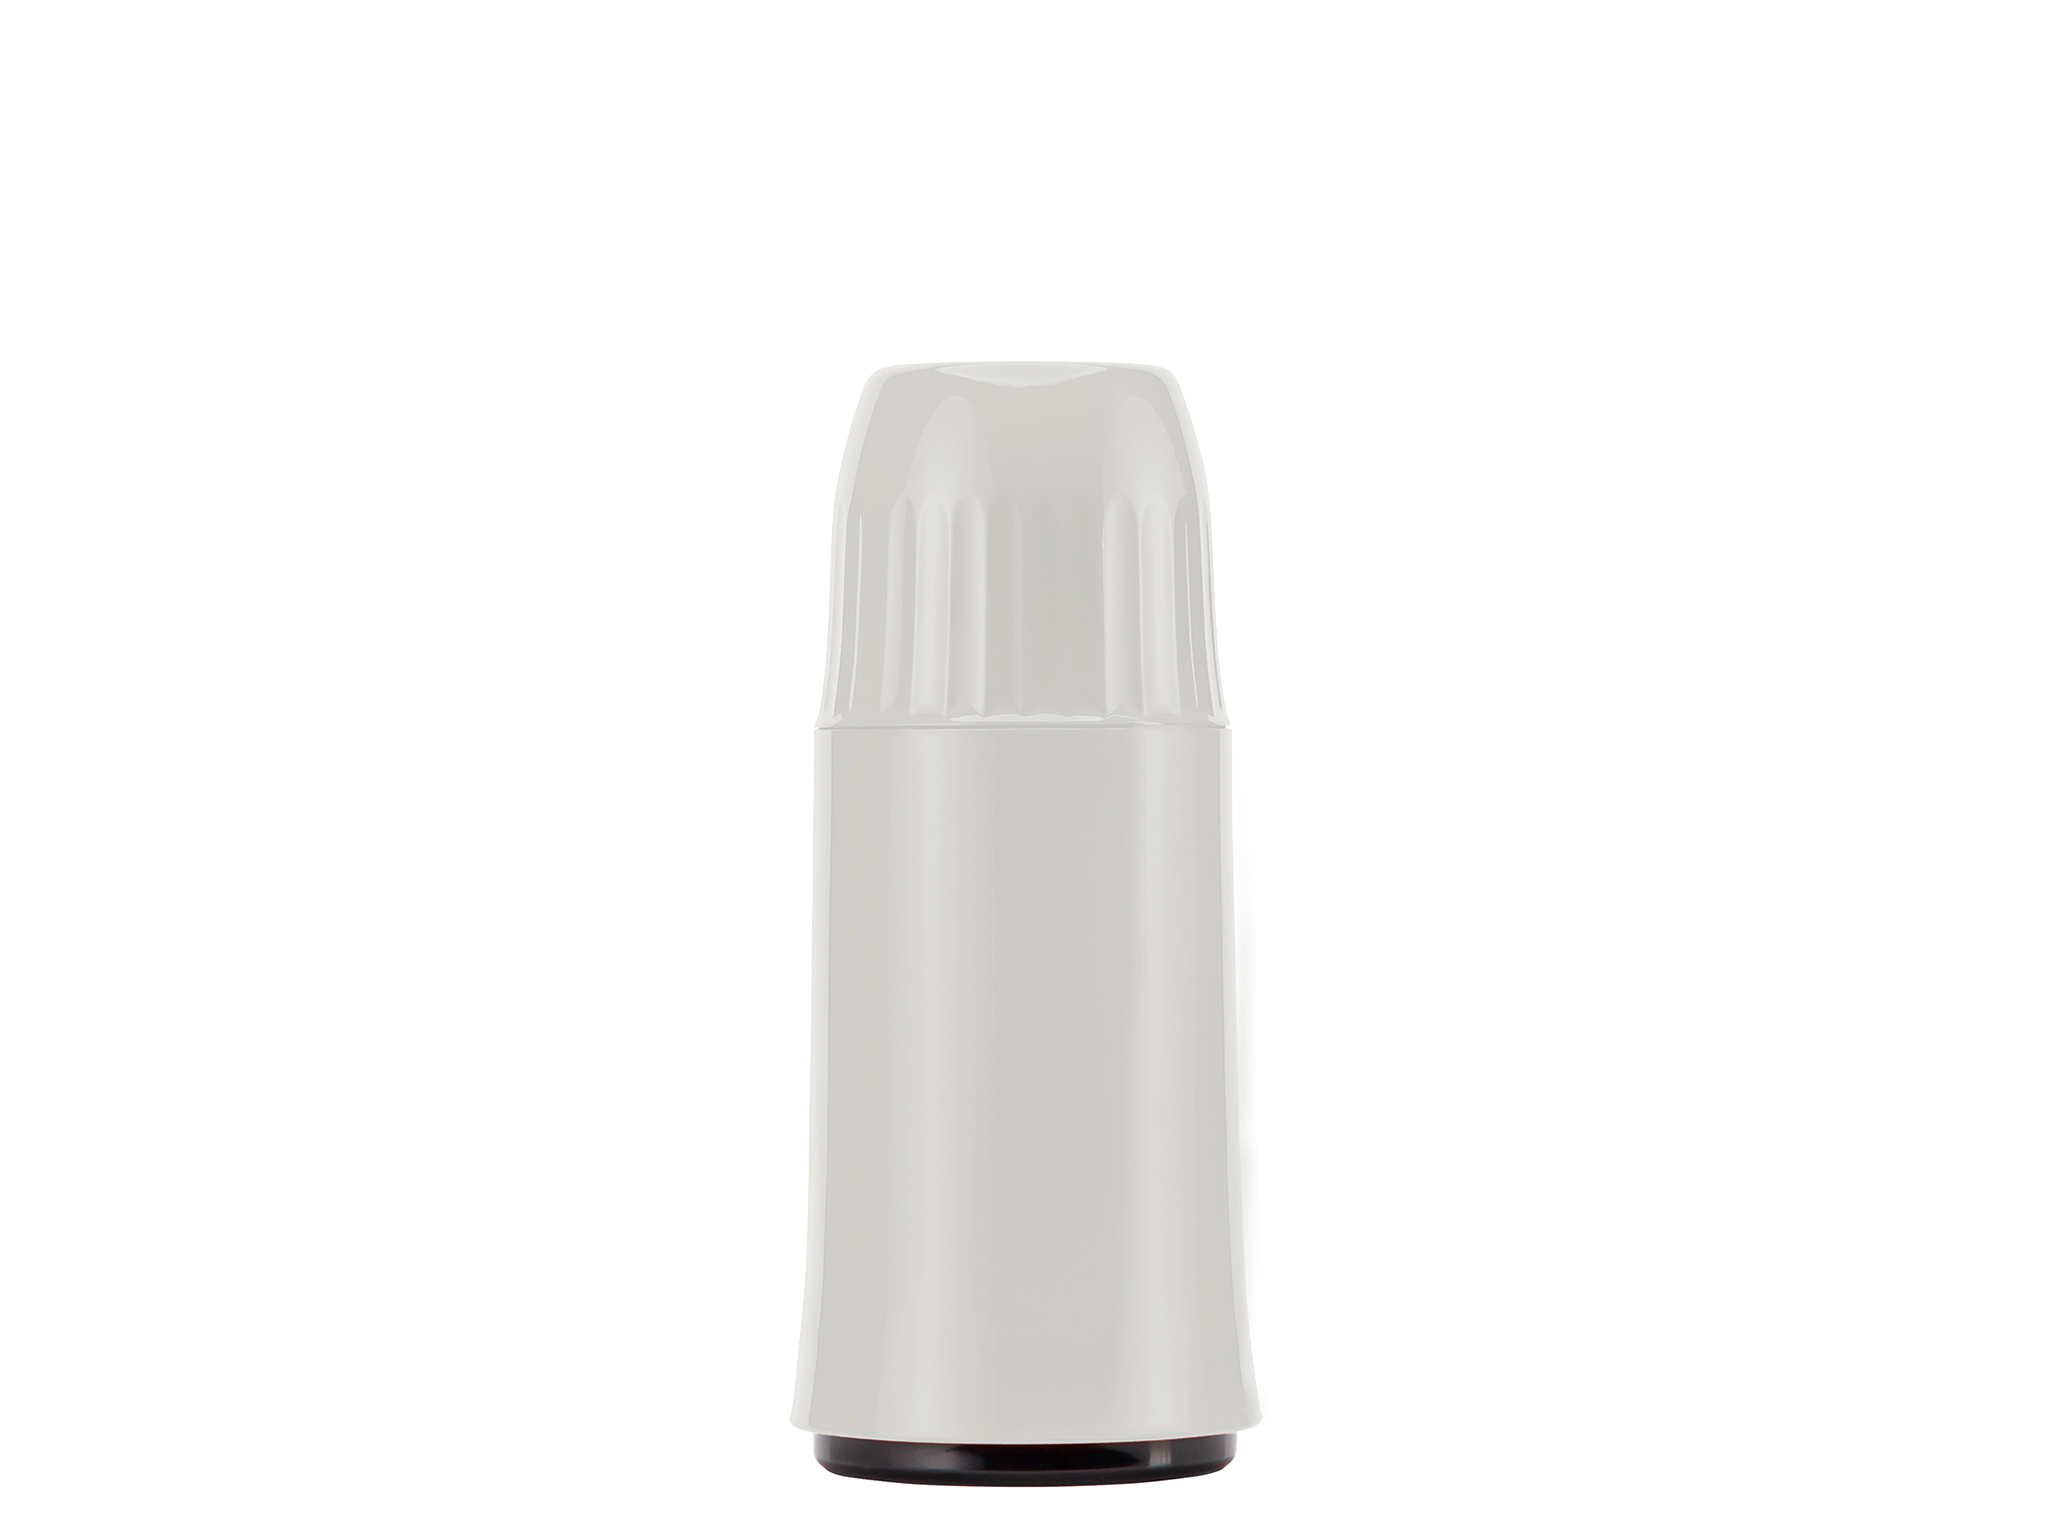 5461-001 - Vacuum flask white 0.25 L ROCKET - Helios